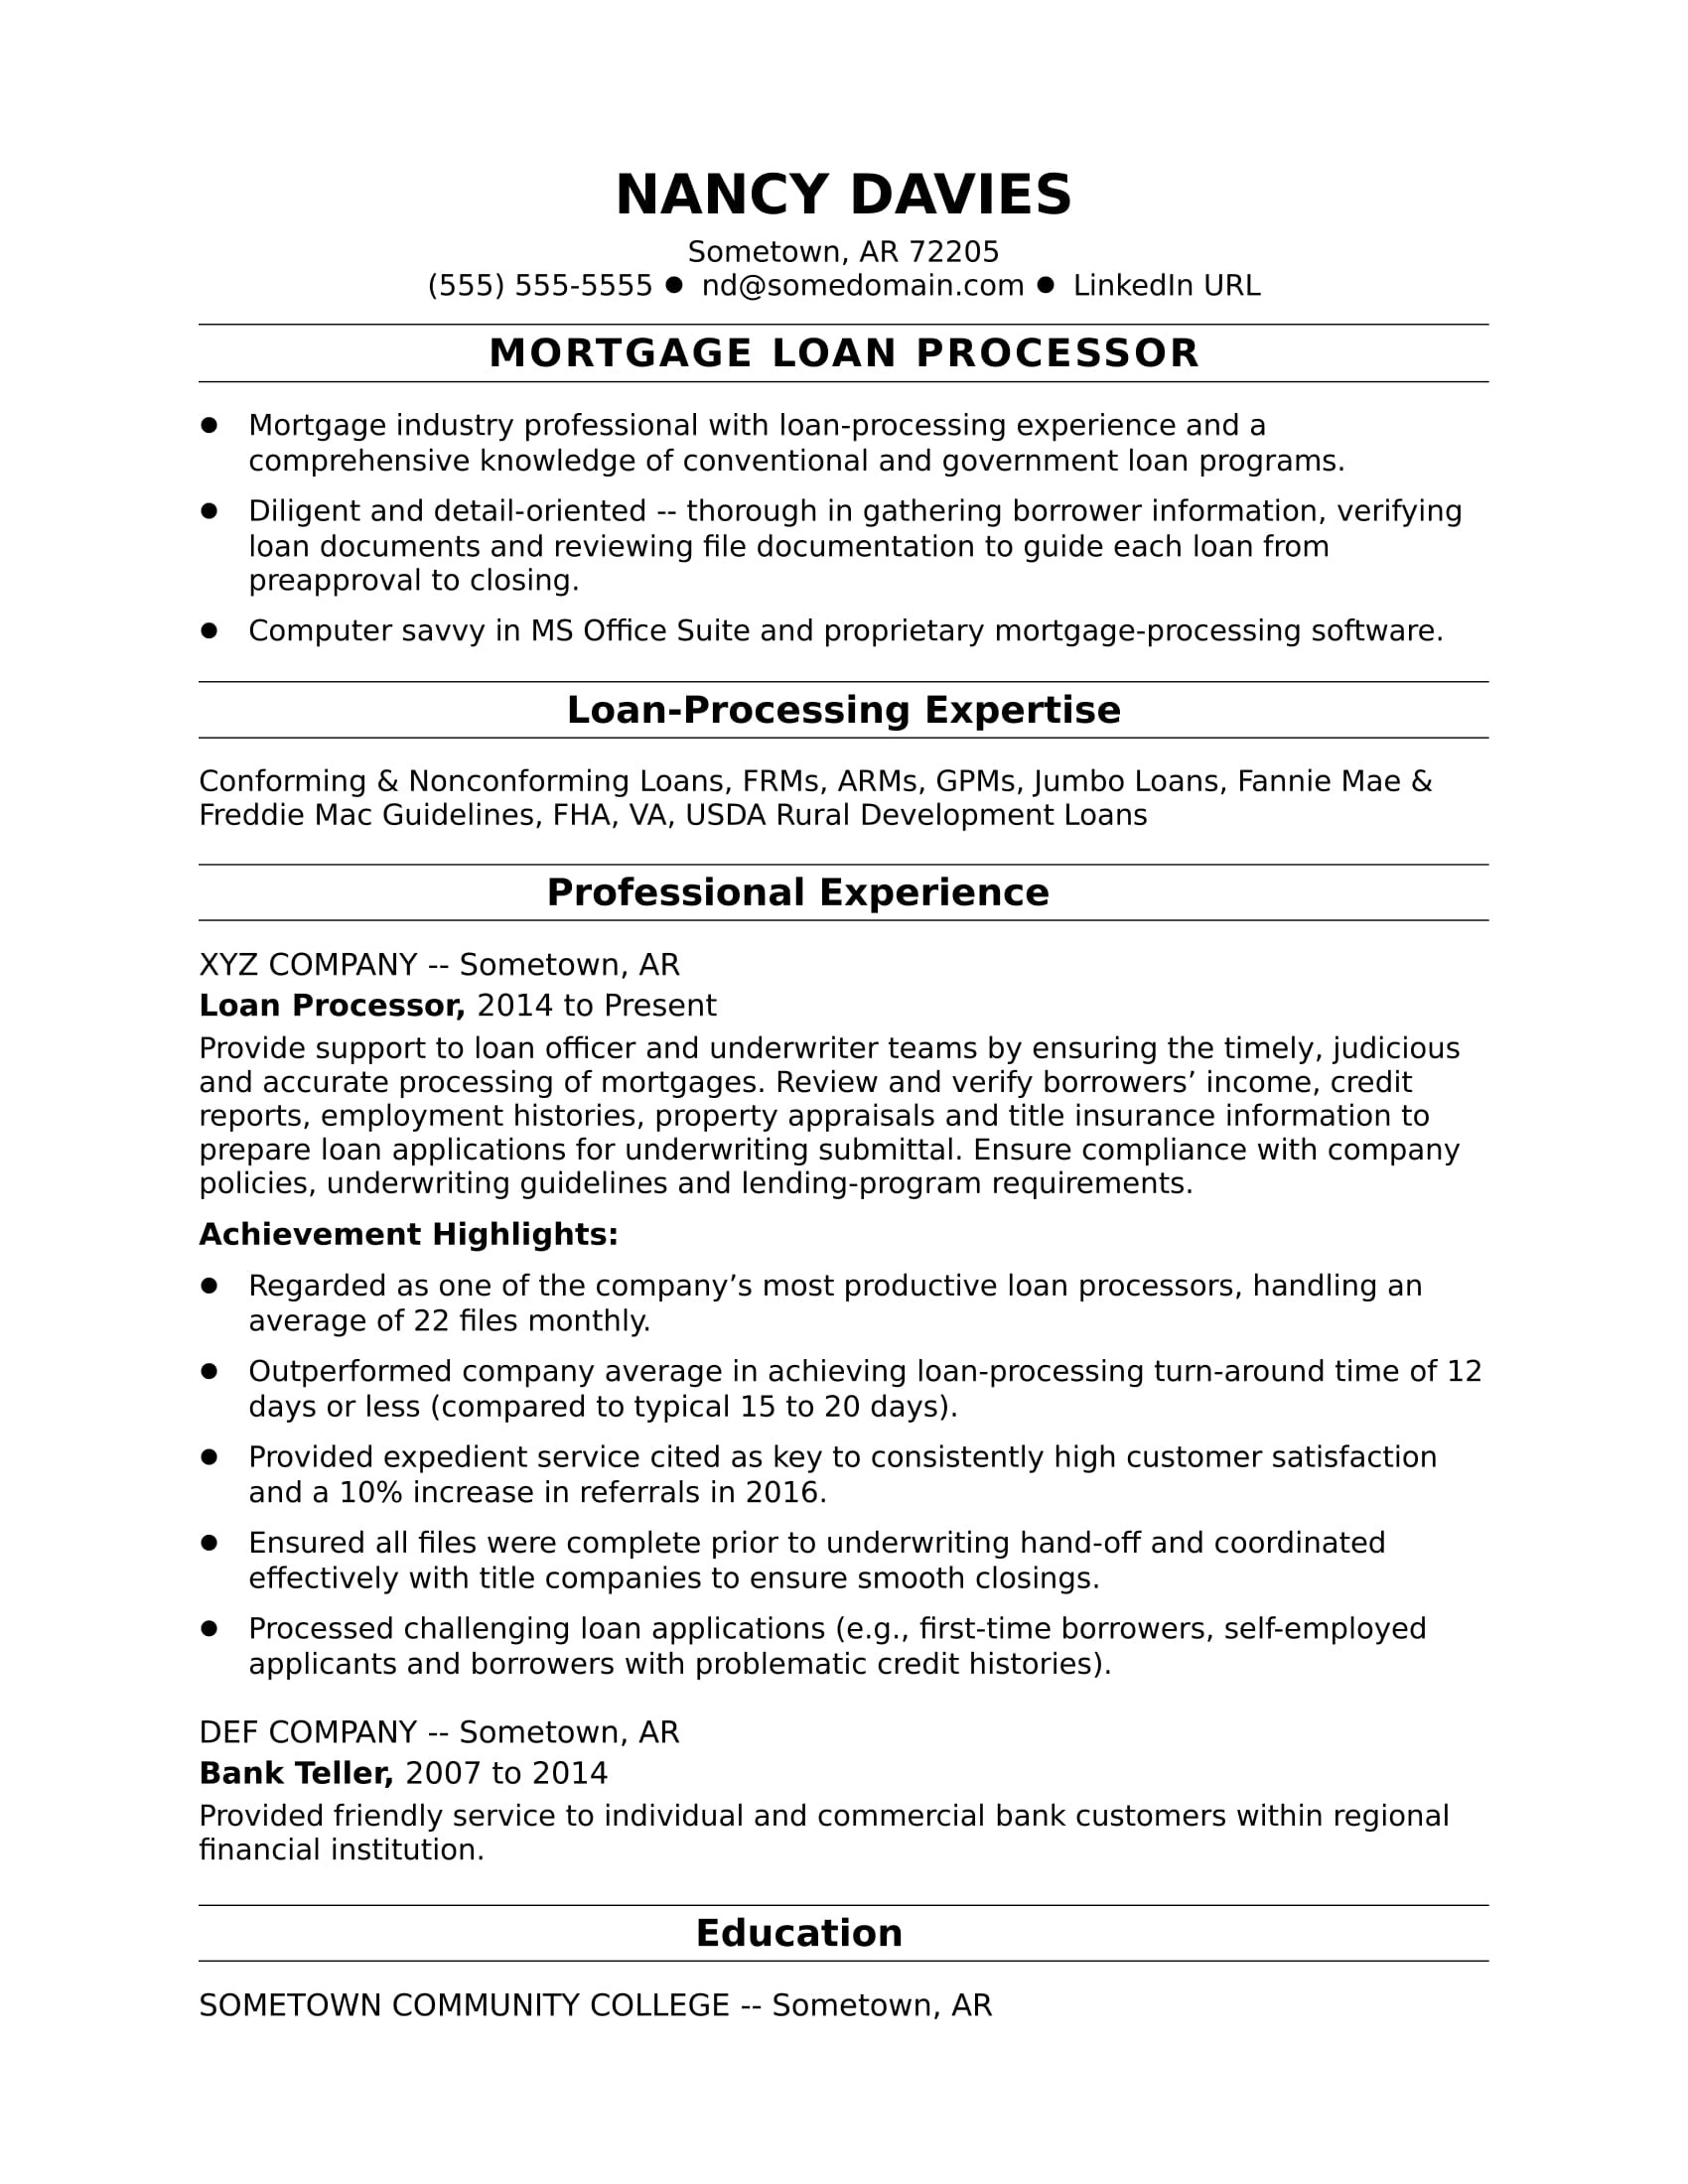 Sample Resume for Business Loan Application Mortgage Loan Processor Resume Sample Monster.com